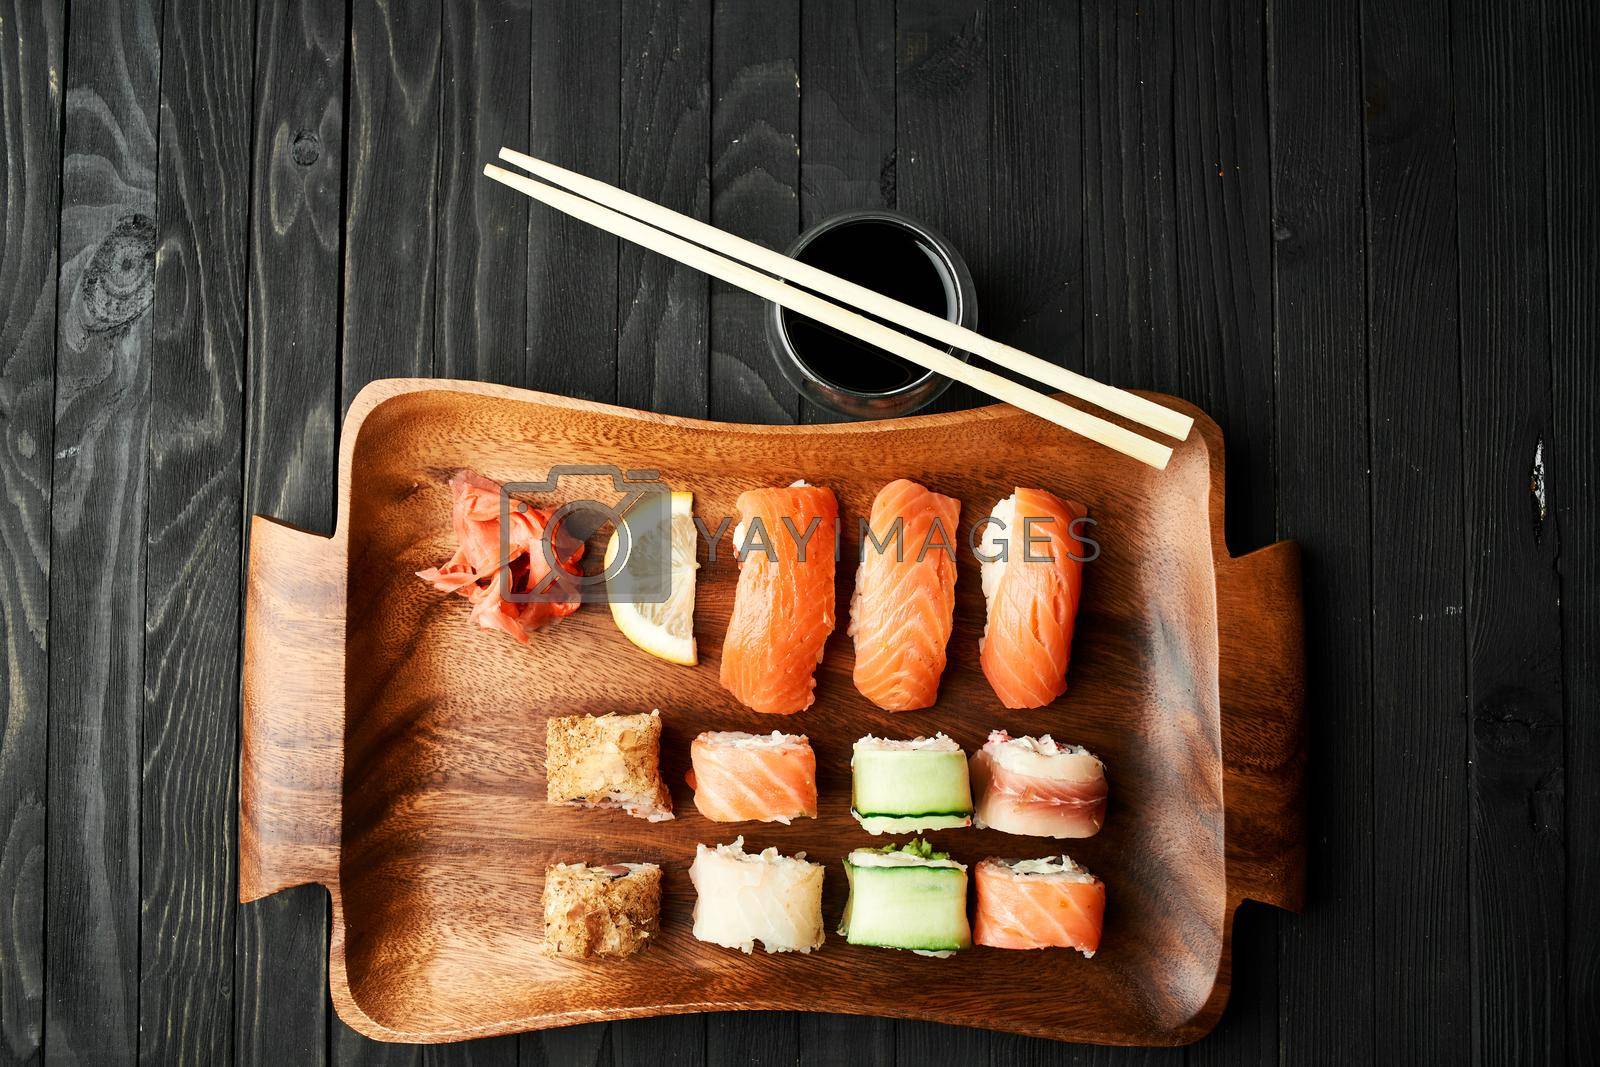 asian cuisine sushi sea food traditional cuisine restaurant. High quality photo